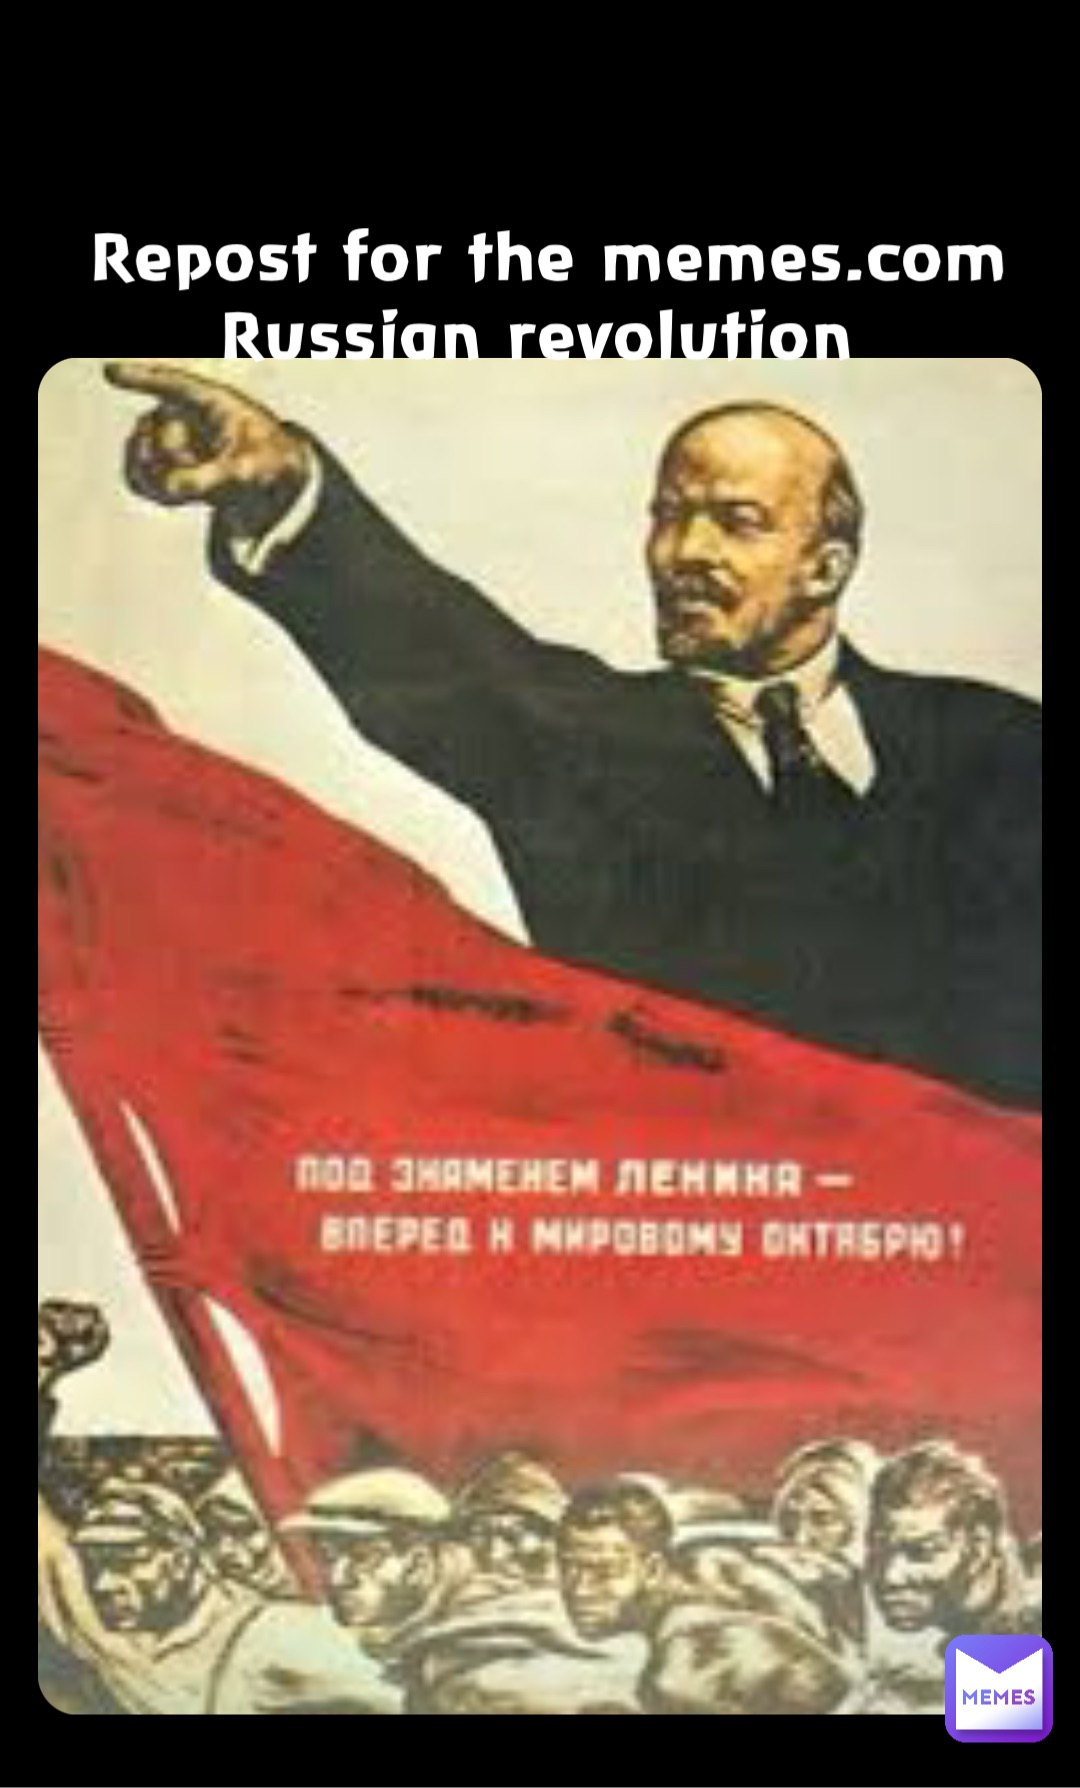 Repost for the memes.com Russian revolution